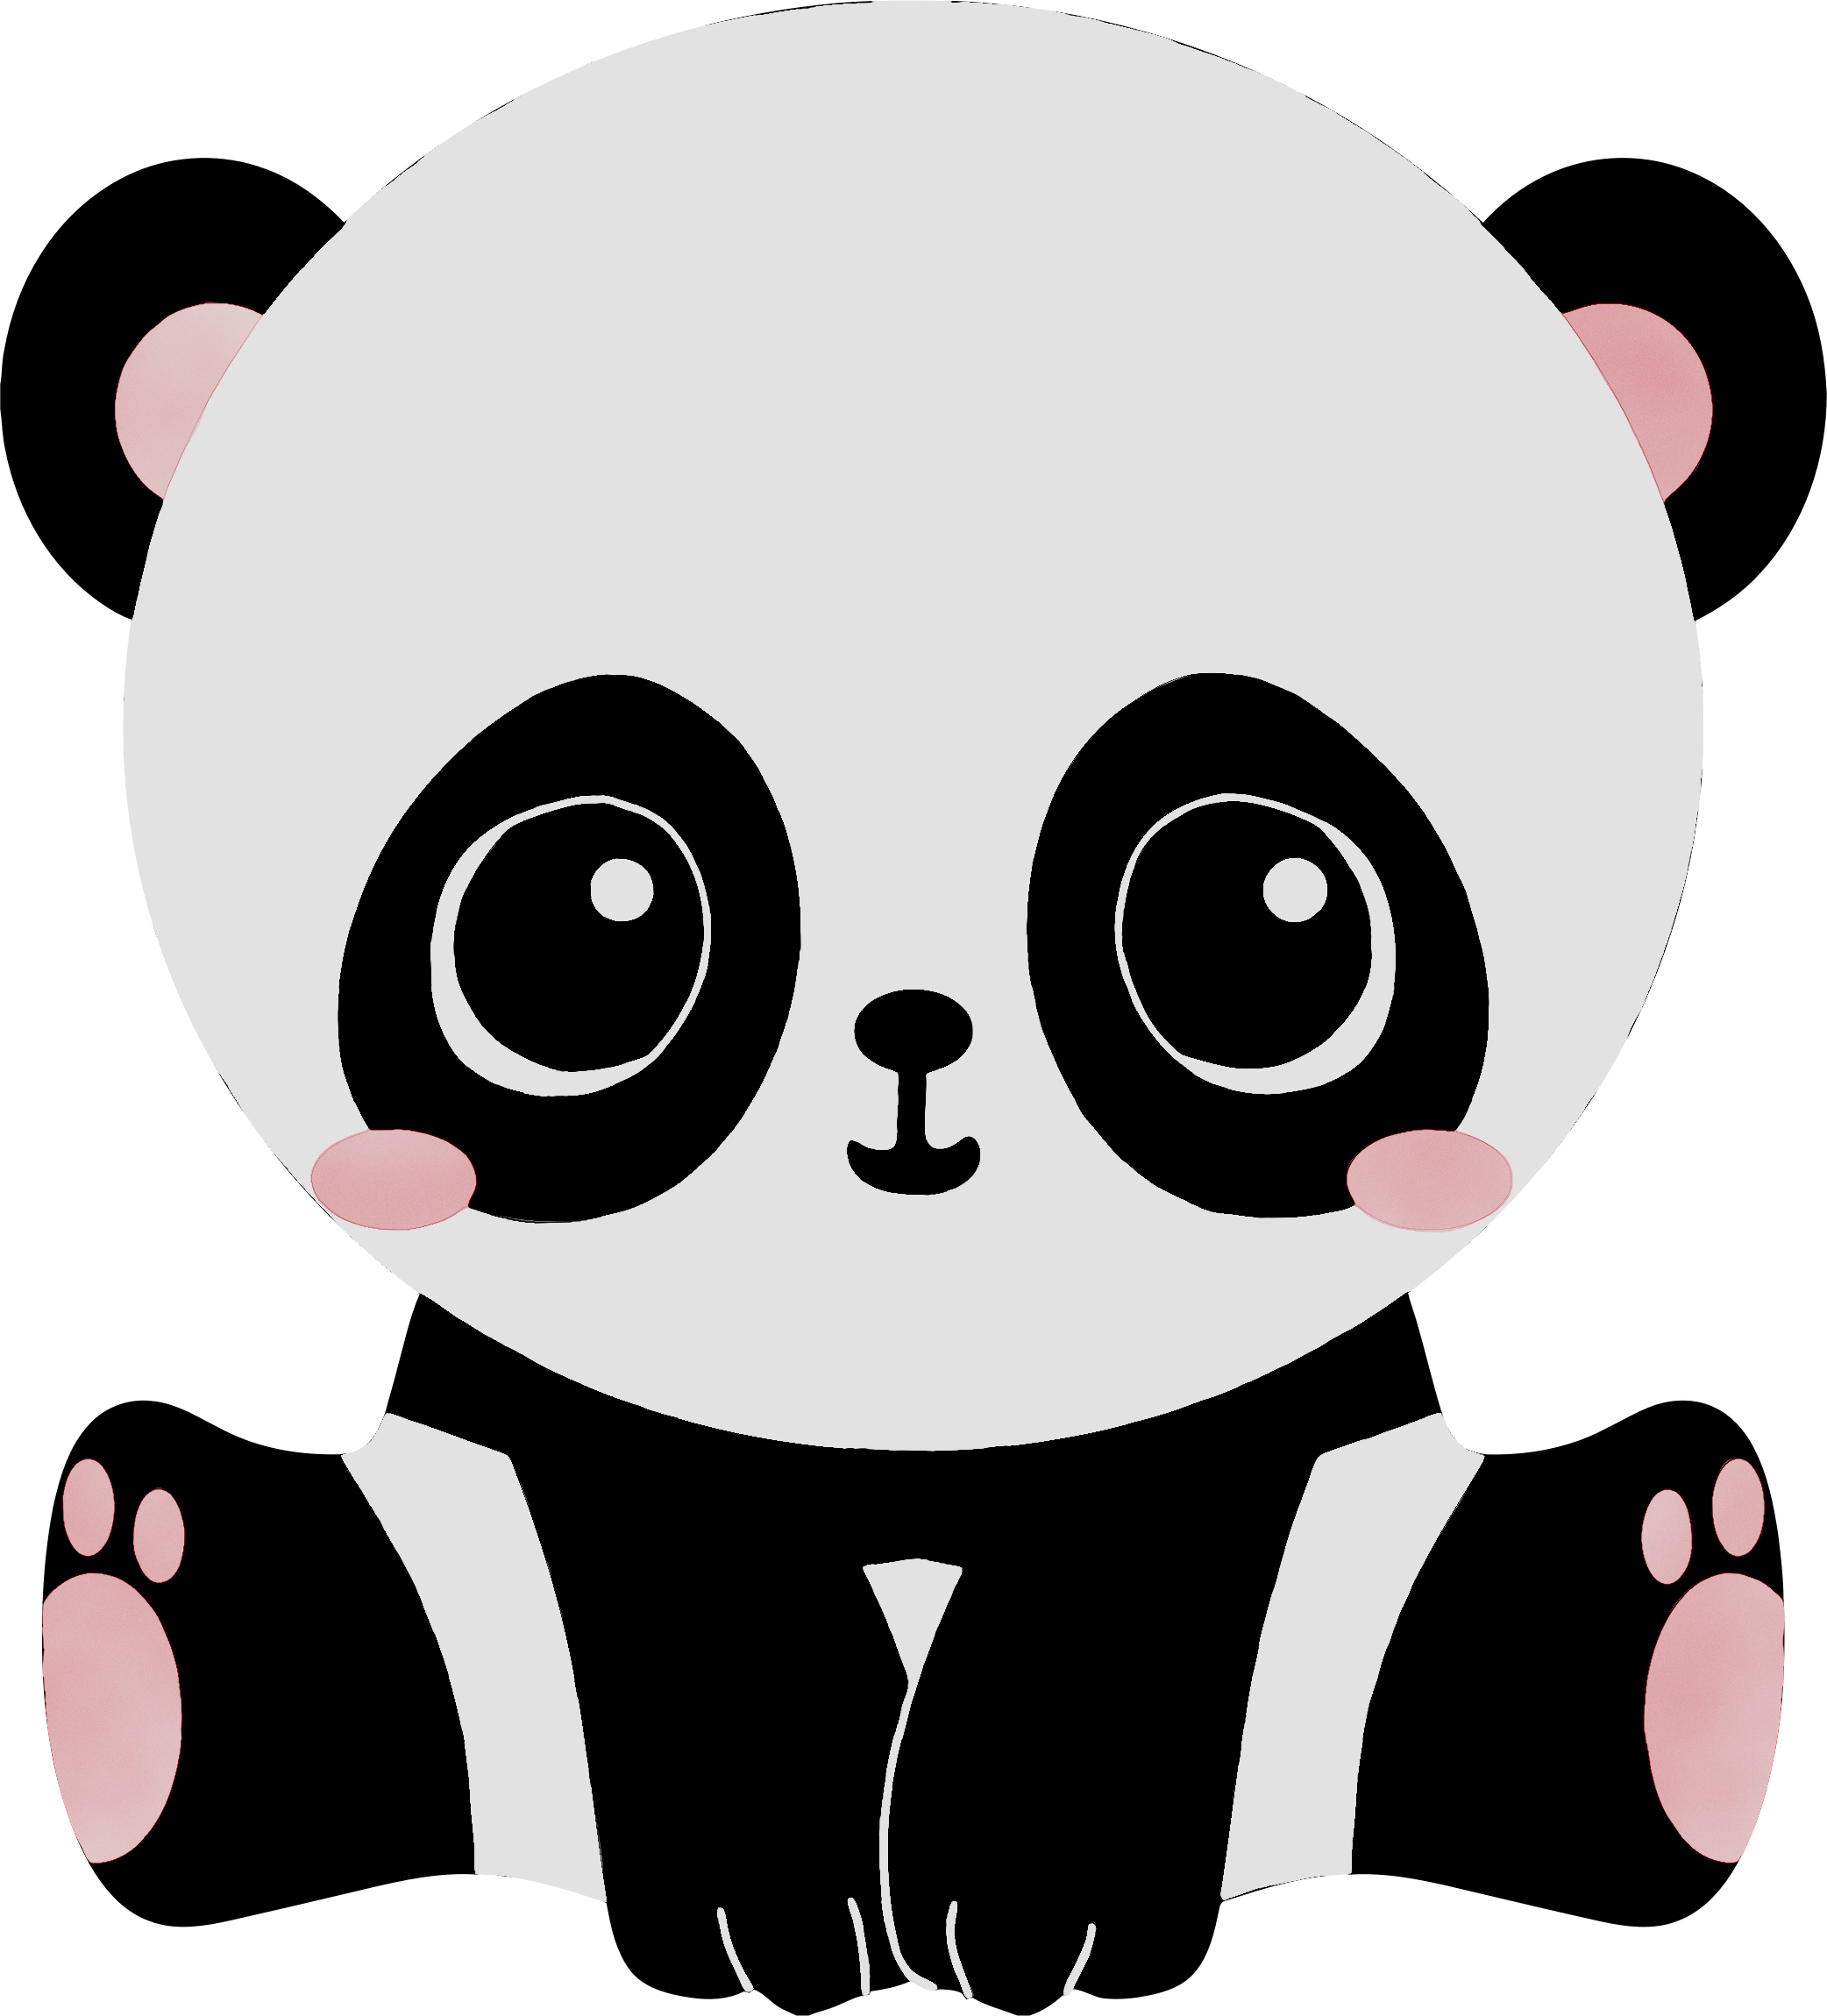 Giant panda cuteness.